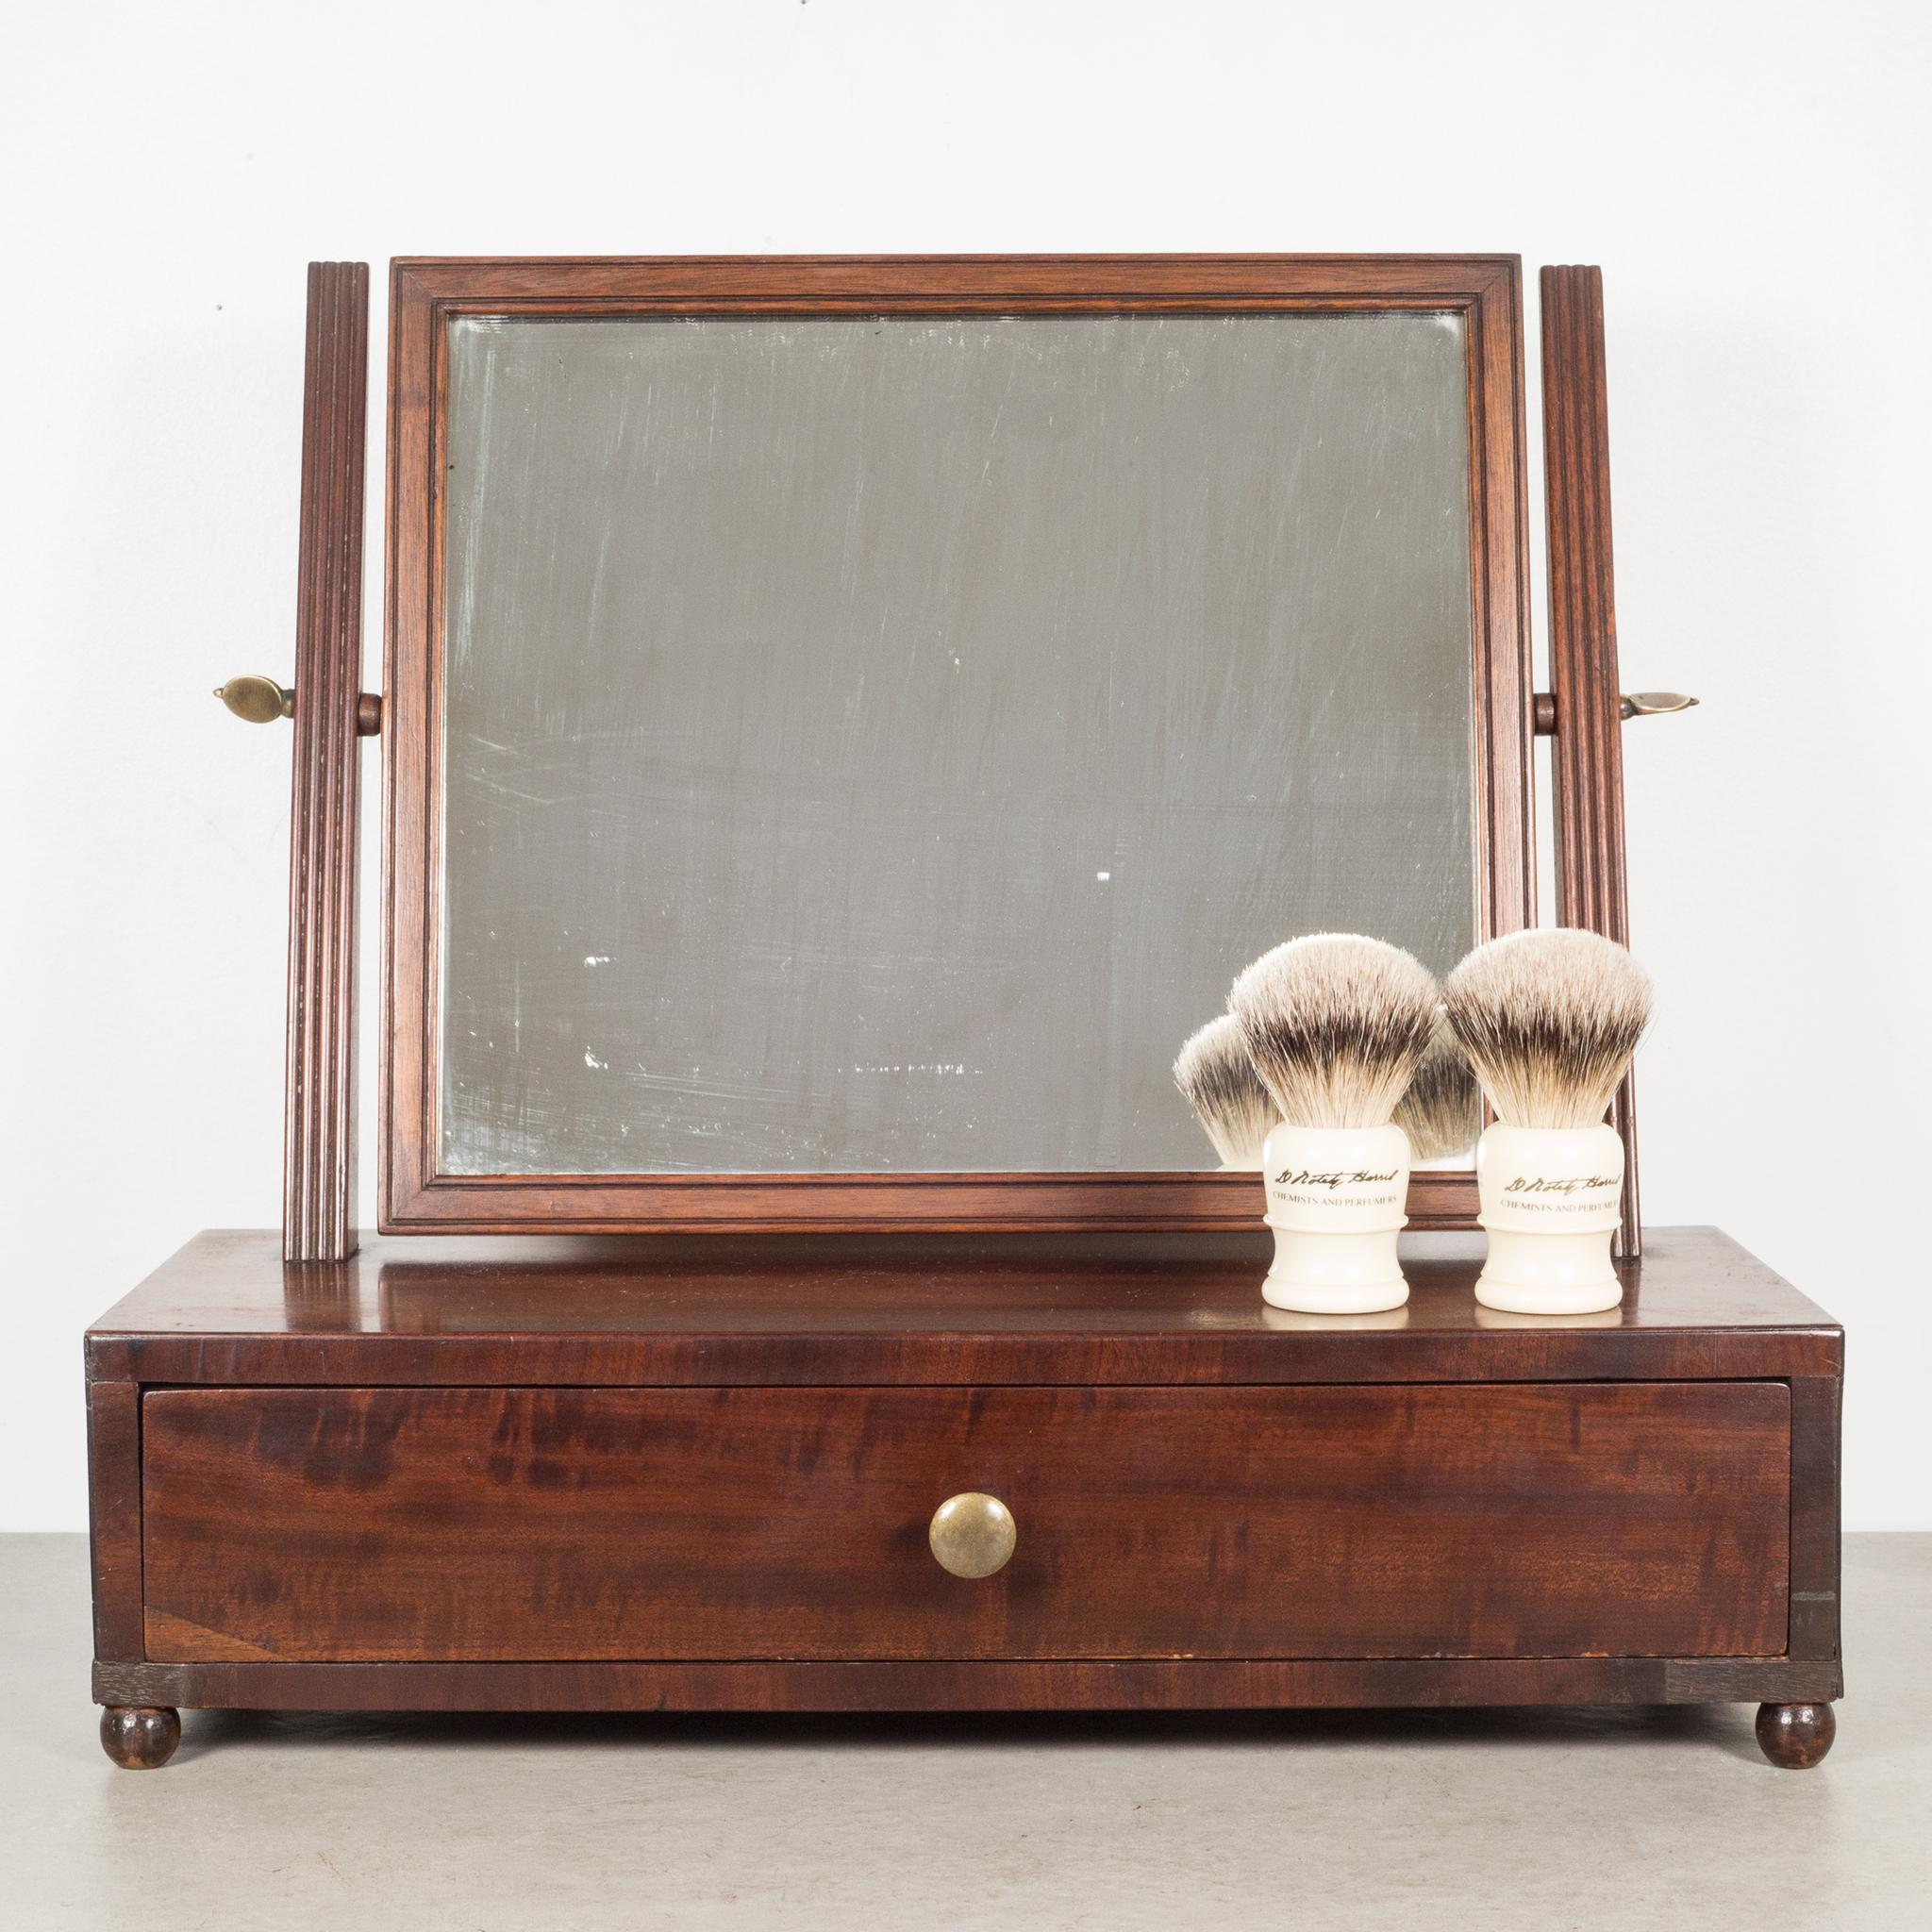 Victorian 19th C. Mahogany and Bronze Table Top Vanity Shaving Mirror, c.1840-1870